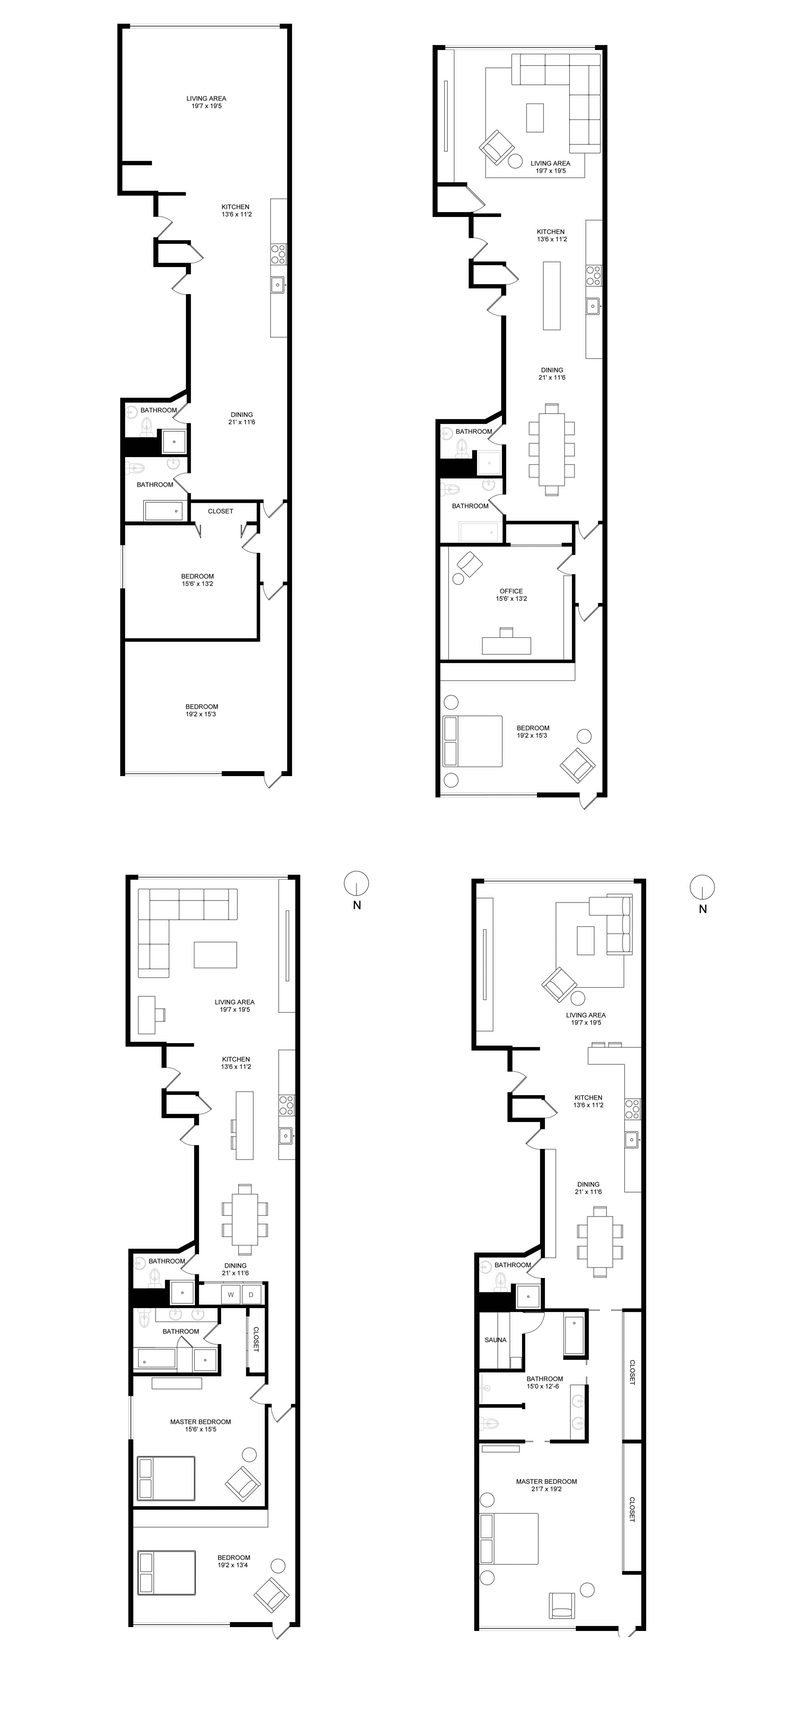 Floorplan for 215 West, 29th Street, 2